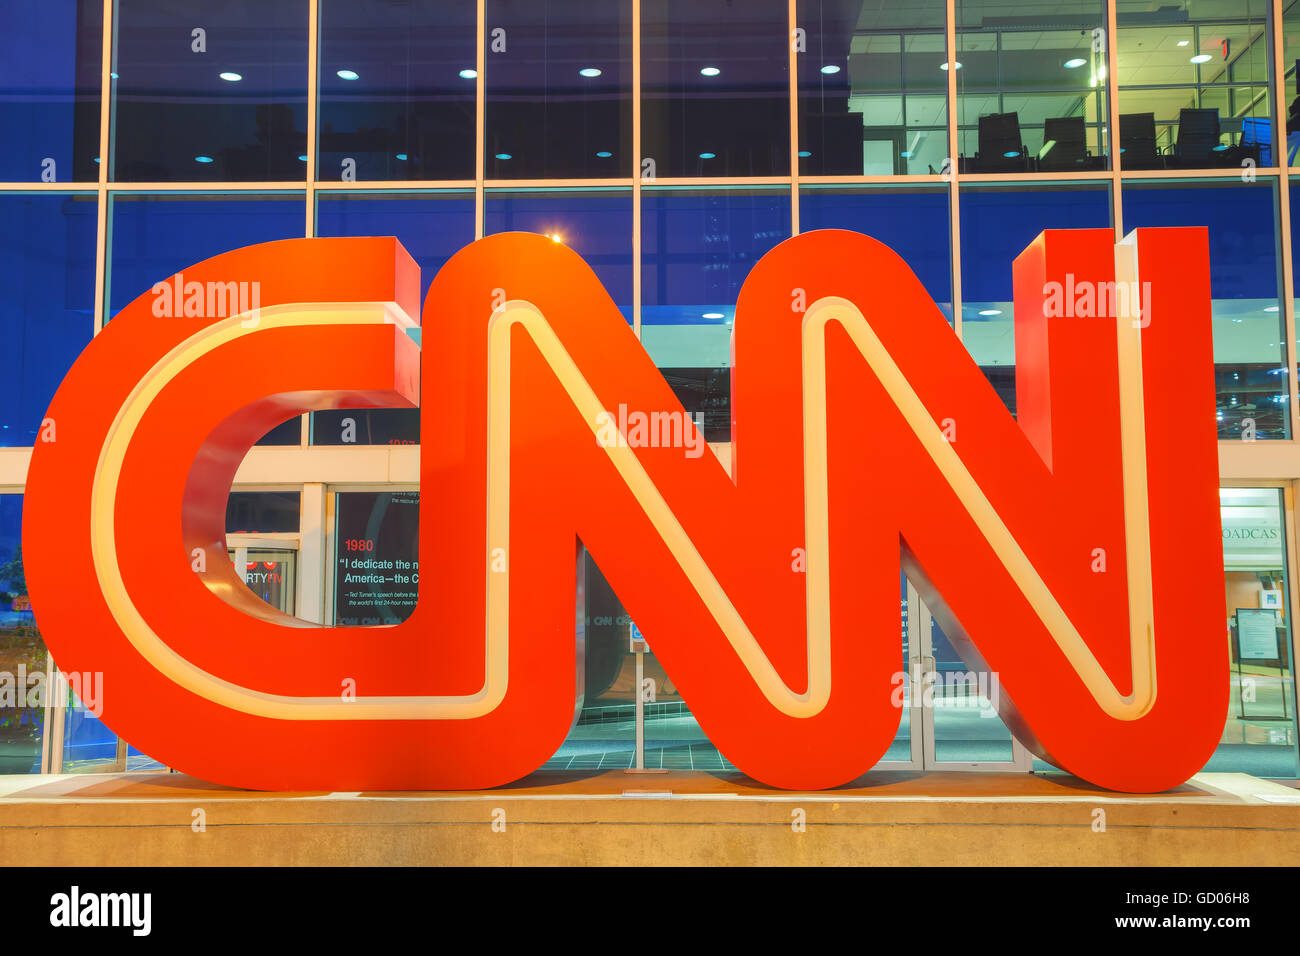 ATLANTA - AUGUST 29: CNN Center in Atlanta on August 29, 2015 in Atlanta. The CNN Center is the world headquarters of CNN. Stock Photo